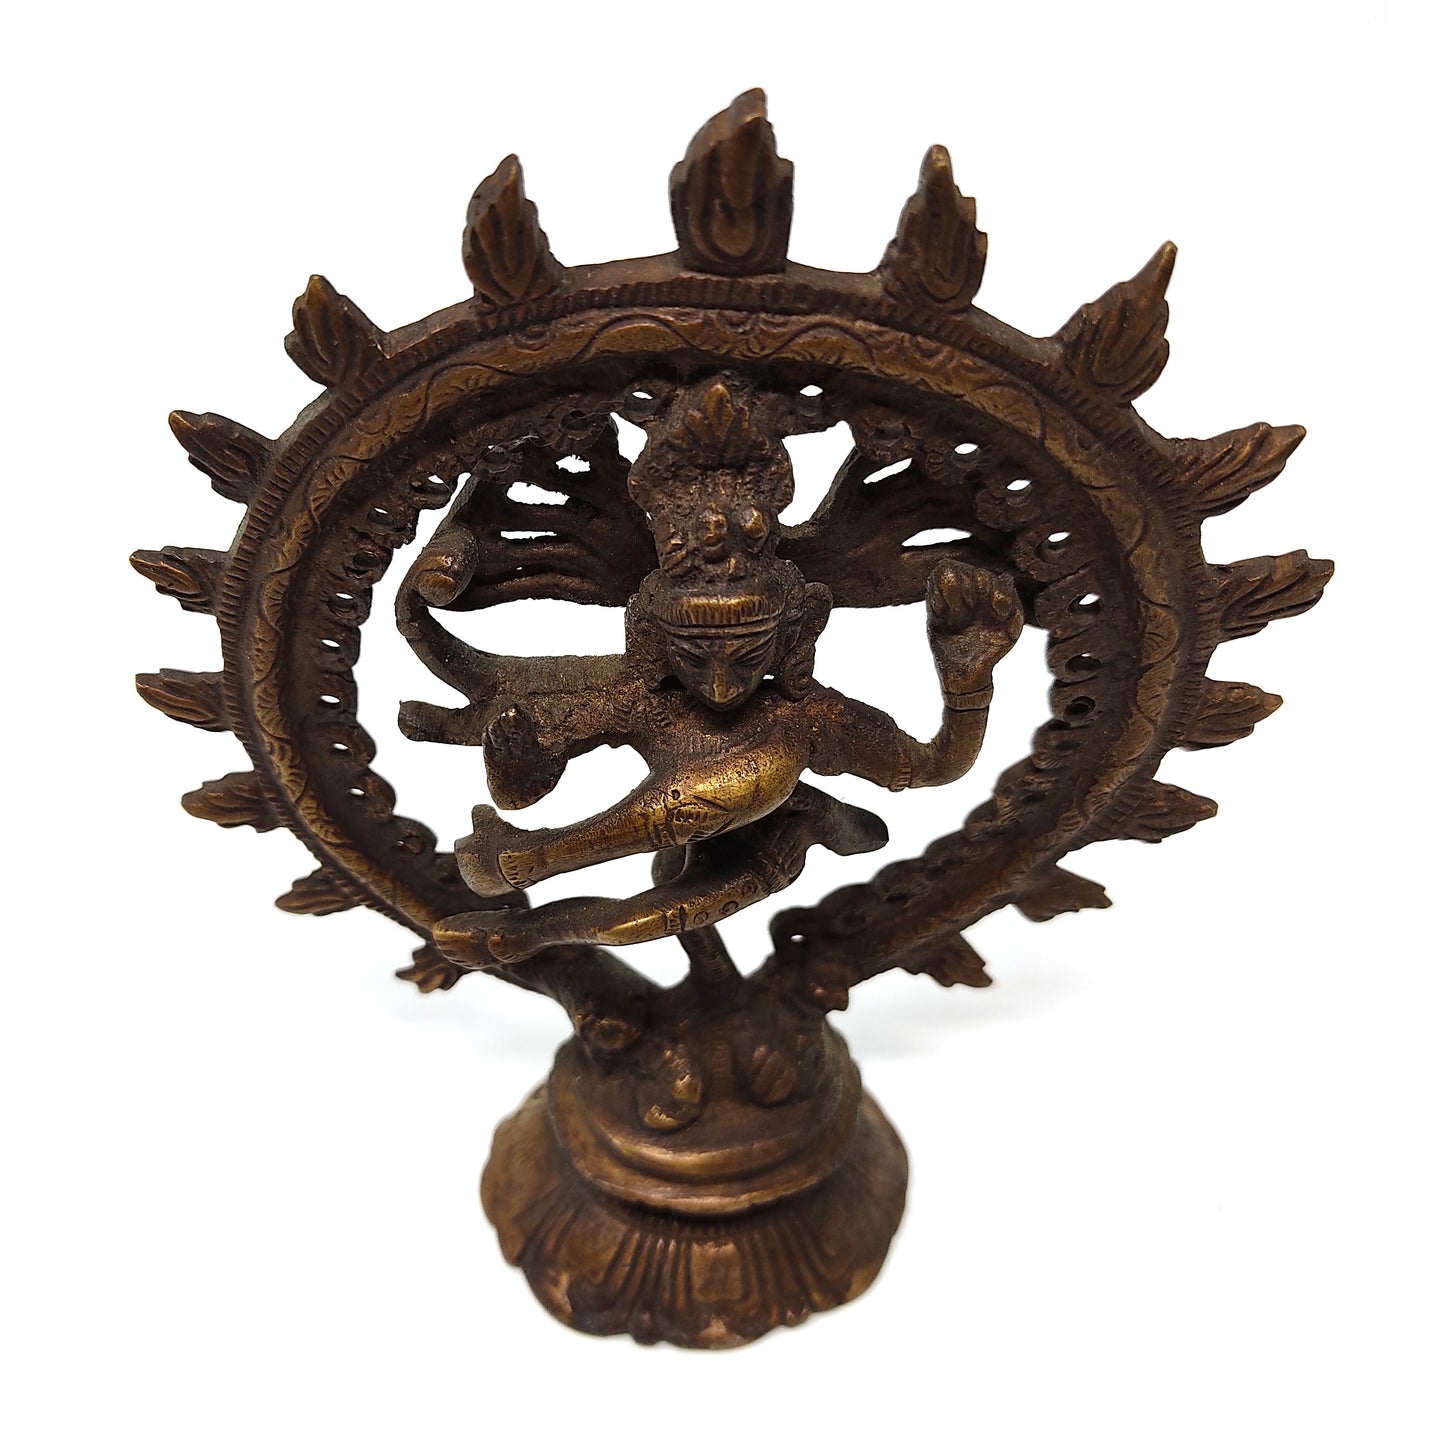 Nataraja Brass Statue Dancing Shiva Nataraj Handmade India God Statue Murti 5.25"